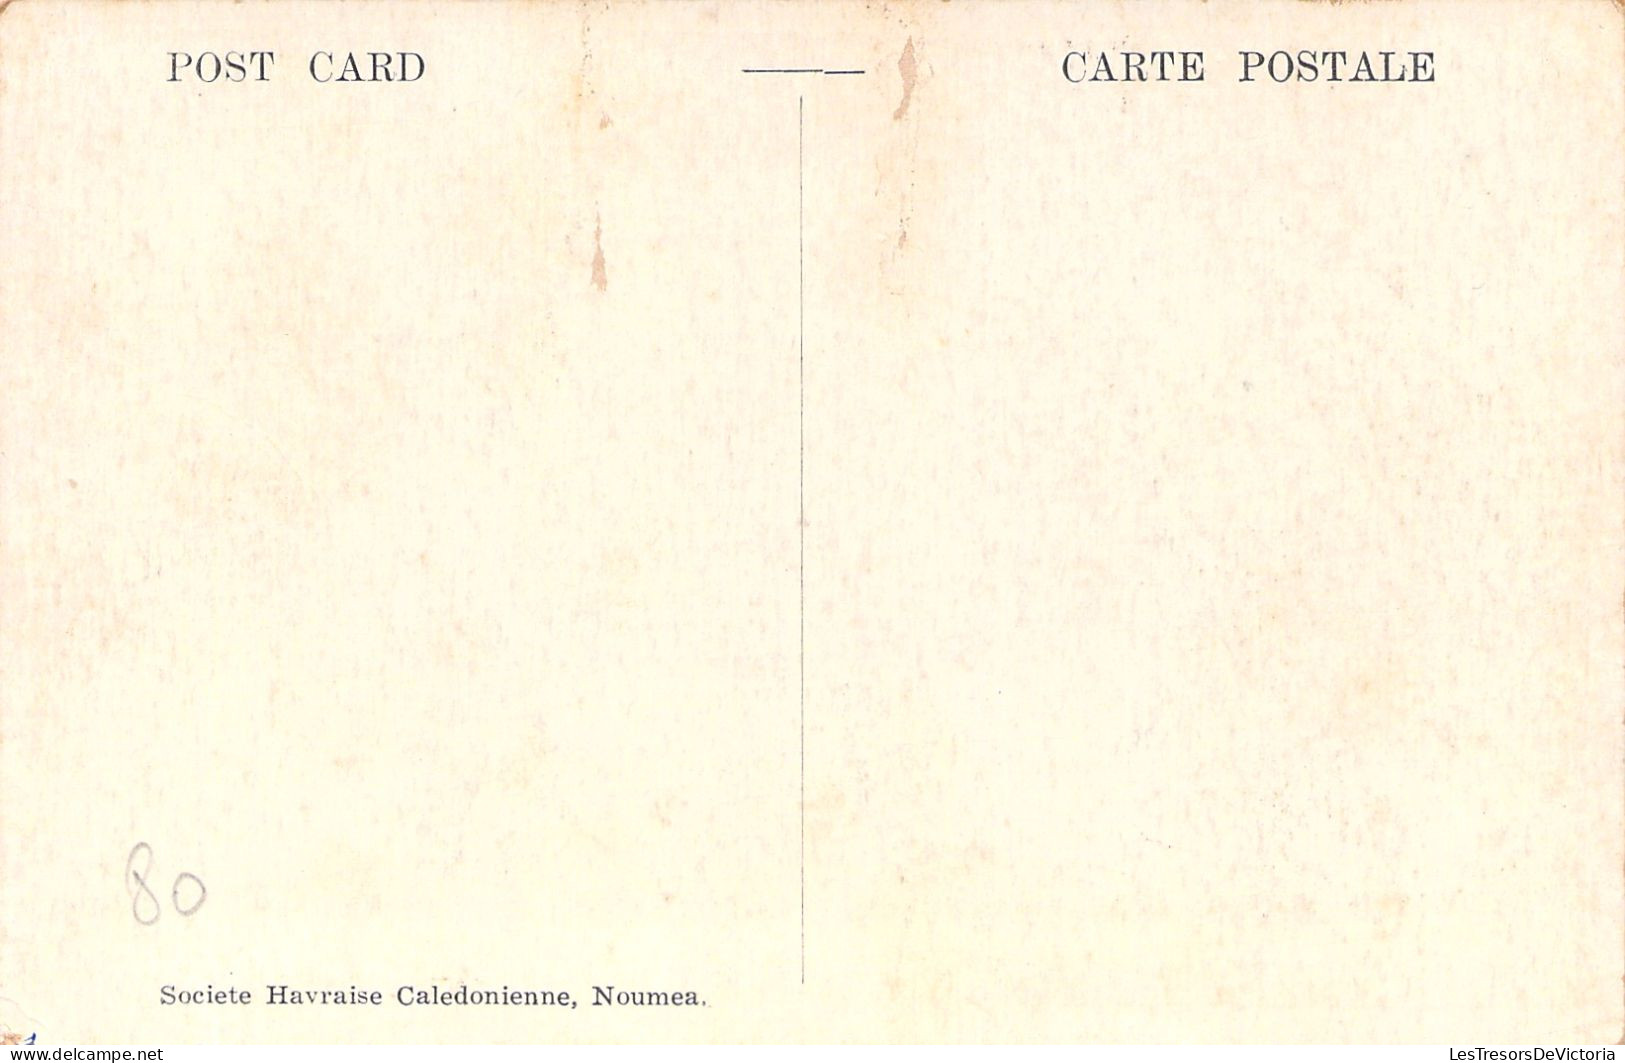 Nouvelle Calédonie  - New Caledonia - Voiture A Boeufs - Bullock Cart - Carte Postale Ancienne - New Caledonia